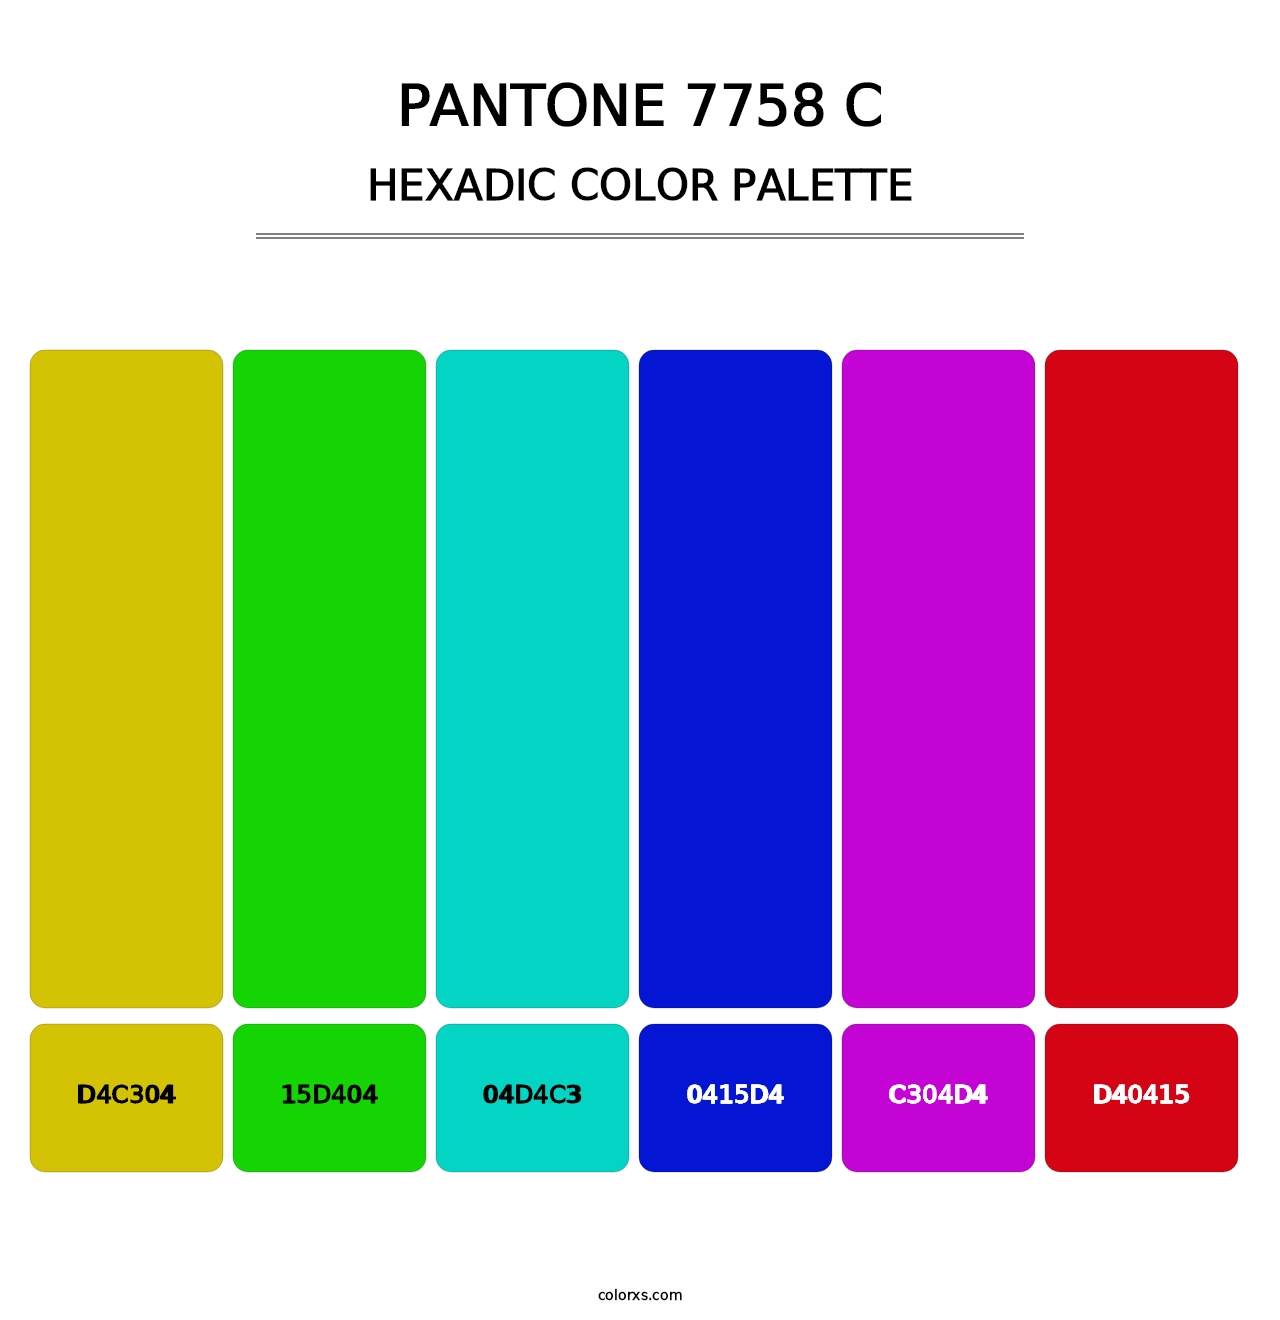 PANTONE 7758 C - Hexadic Color Palette